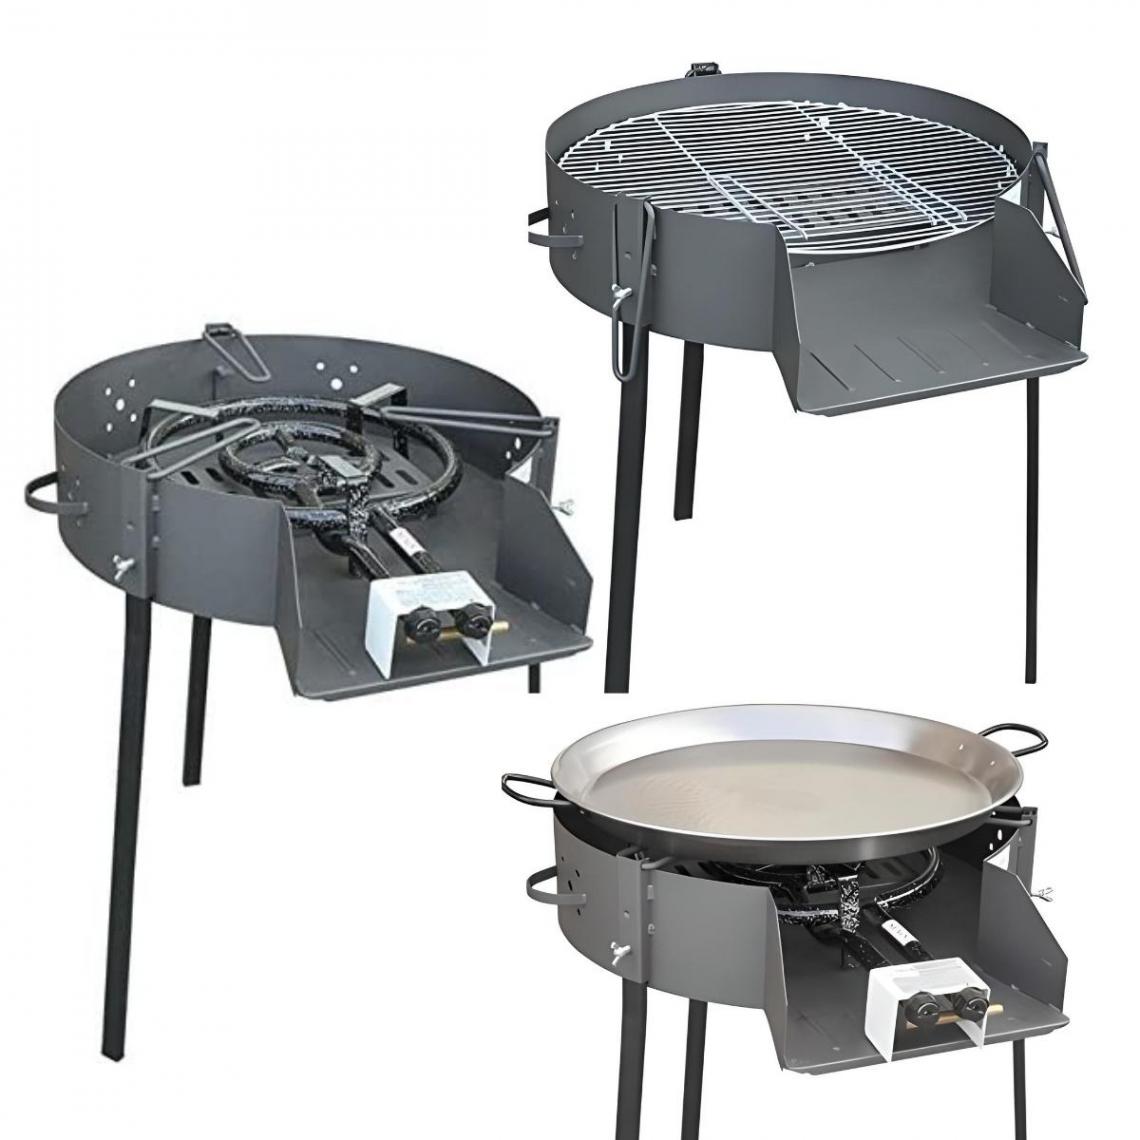 Visiodirect - Barbecue rond avec support en Acier inoxydable coloris noir - 60 x 81 x 93 cm - Barbecues gaz